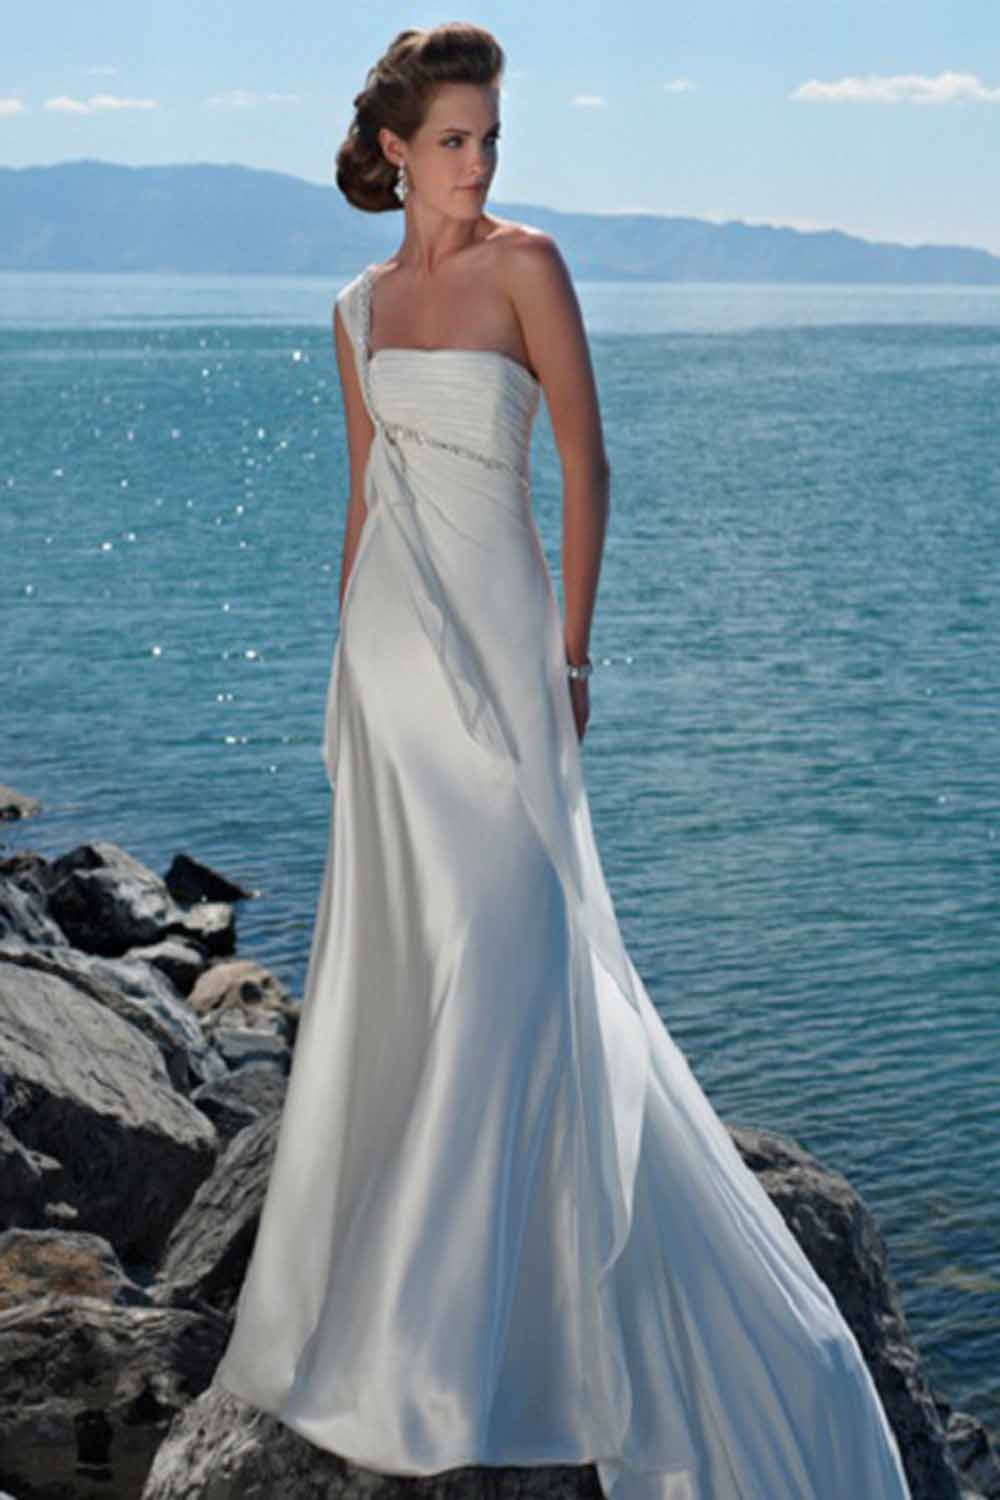 Beachy Wedding Dresses
 Different Styles of Beach Wedding Dresses